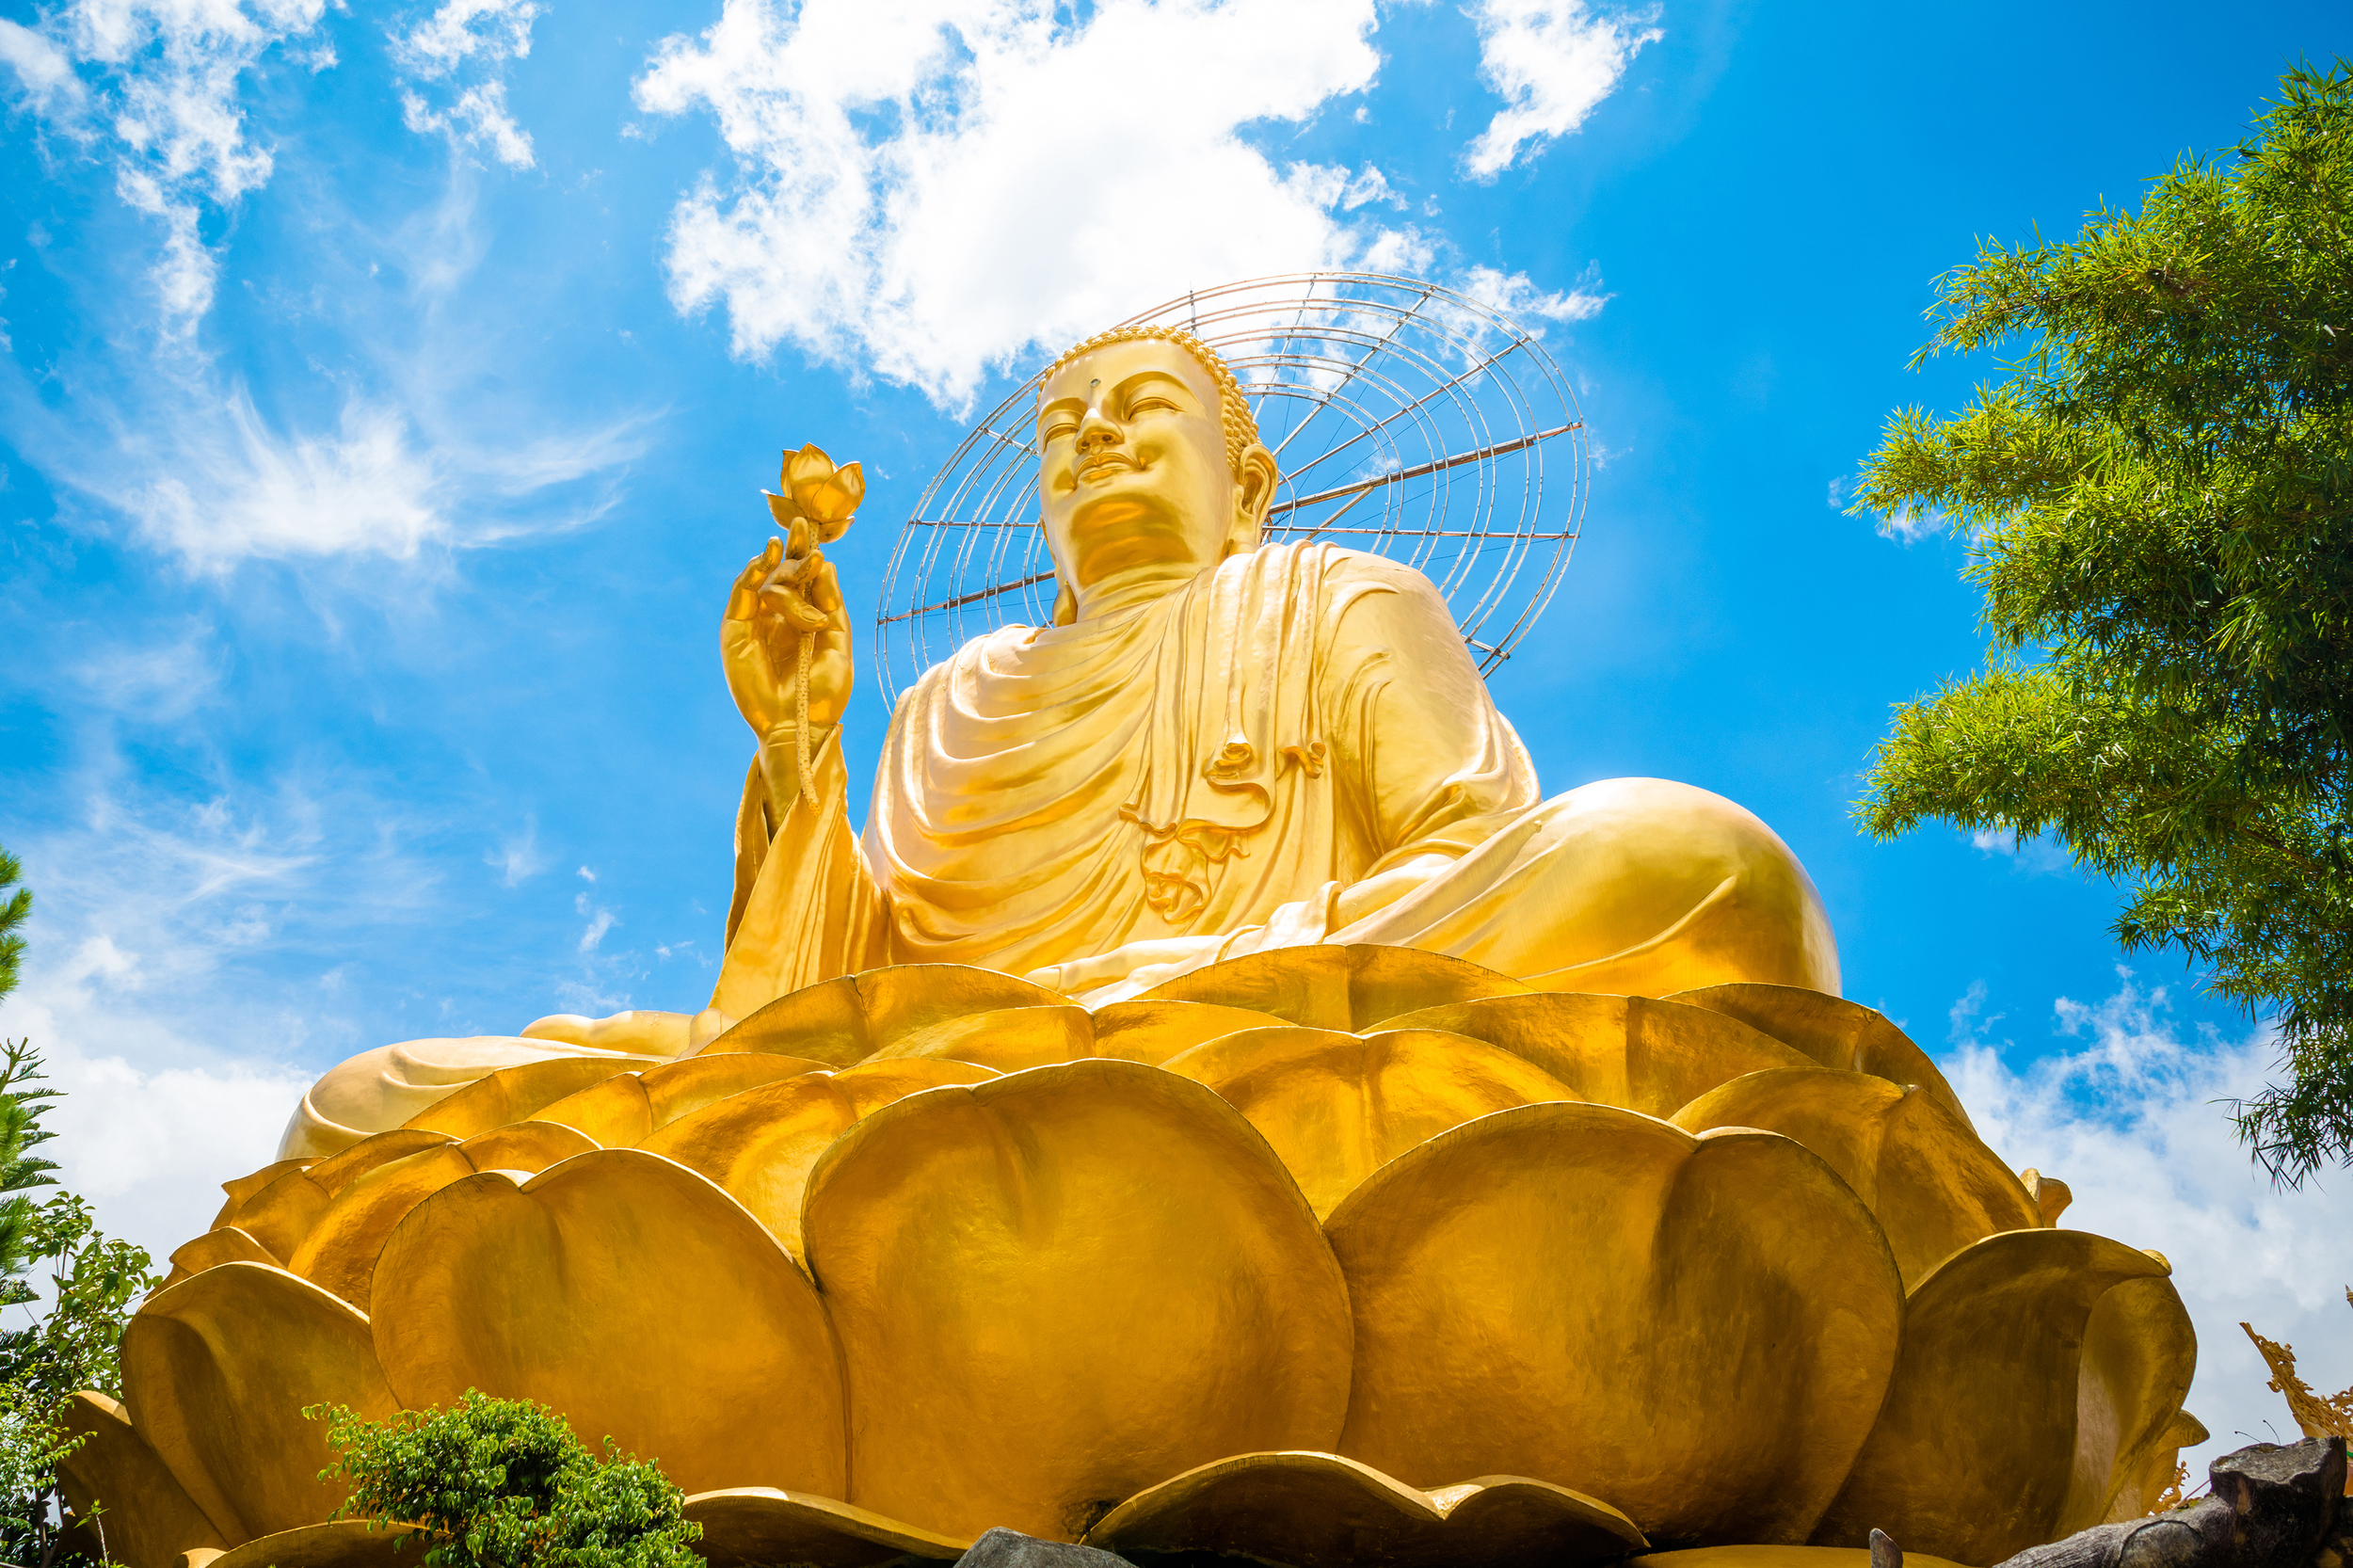 Upwards view of a giant golden buddha